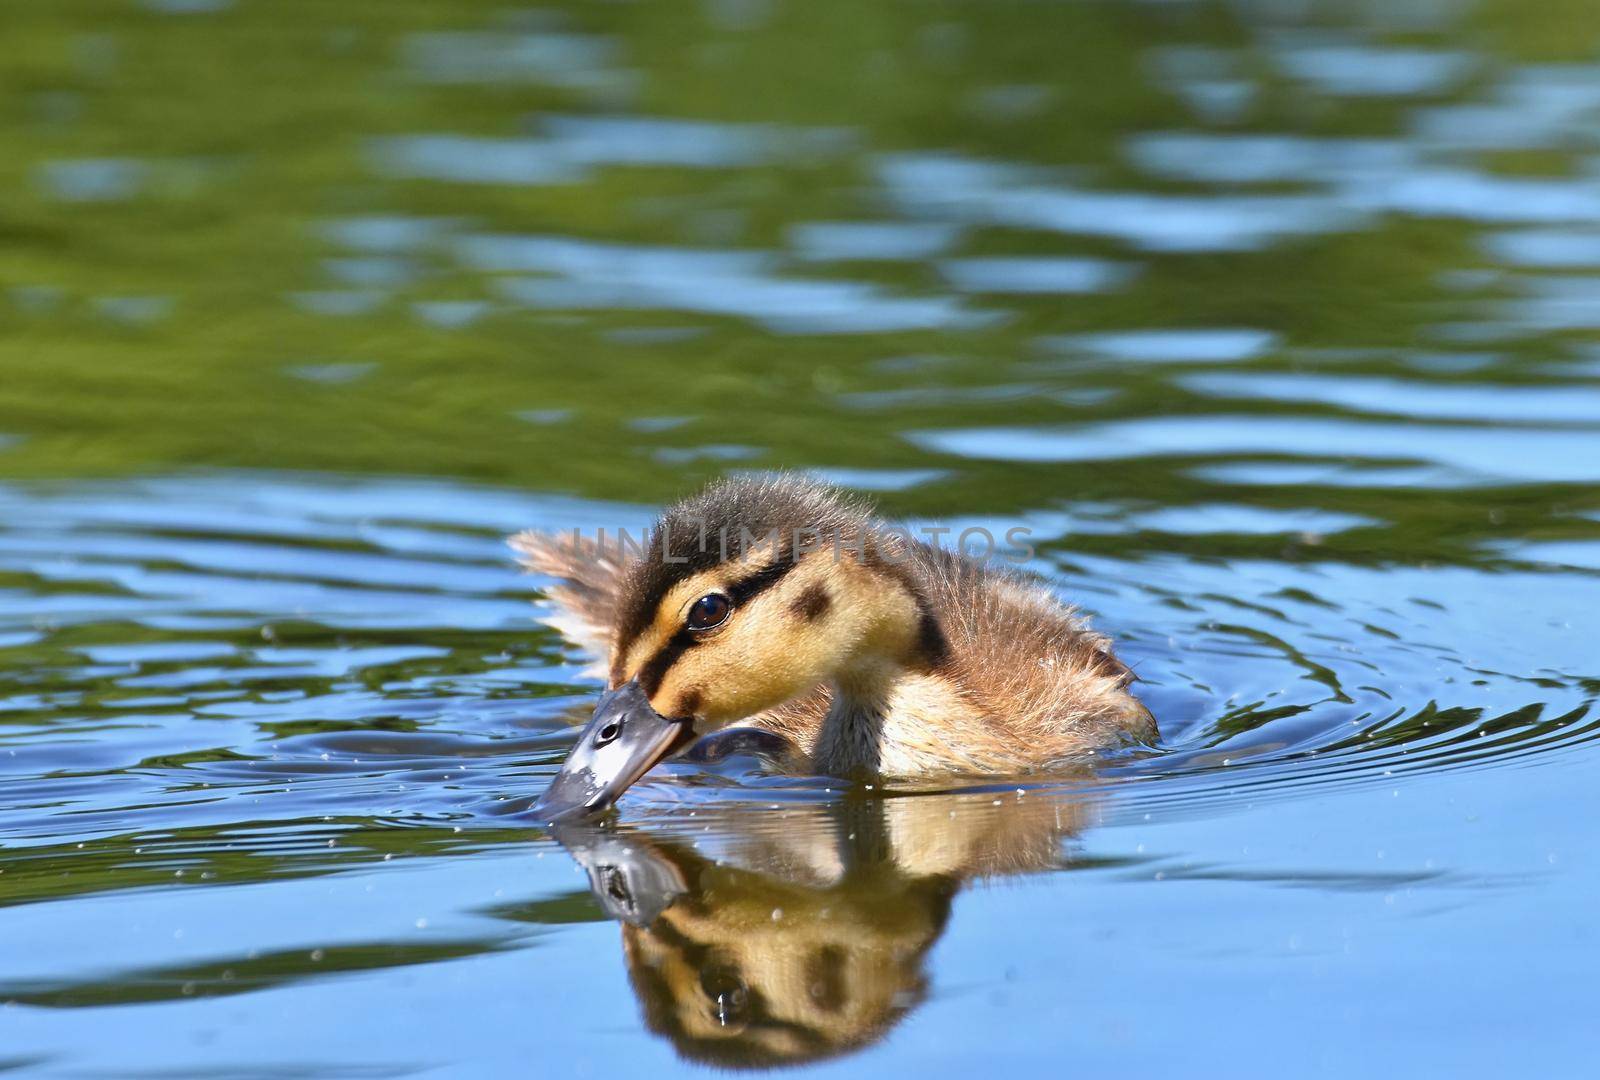 Small ducks on a pond. Fledglings mallards.(Anas platyrhynchos) by Montypeter